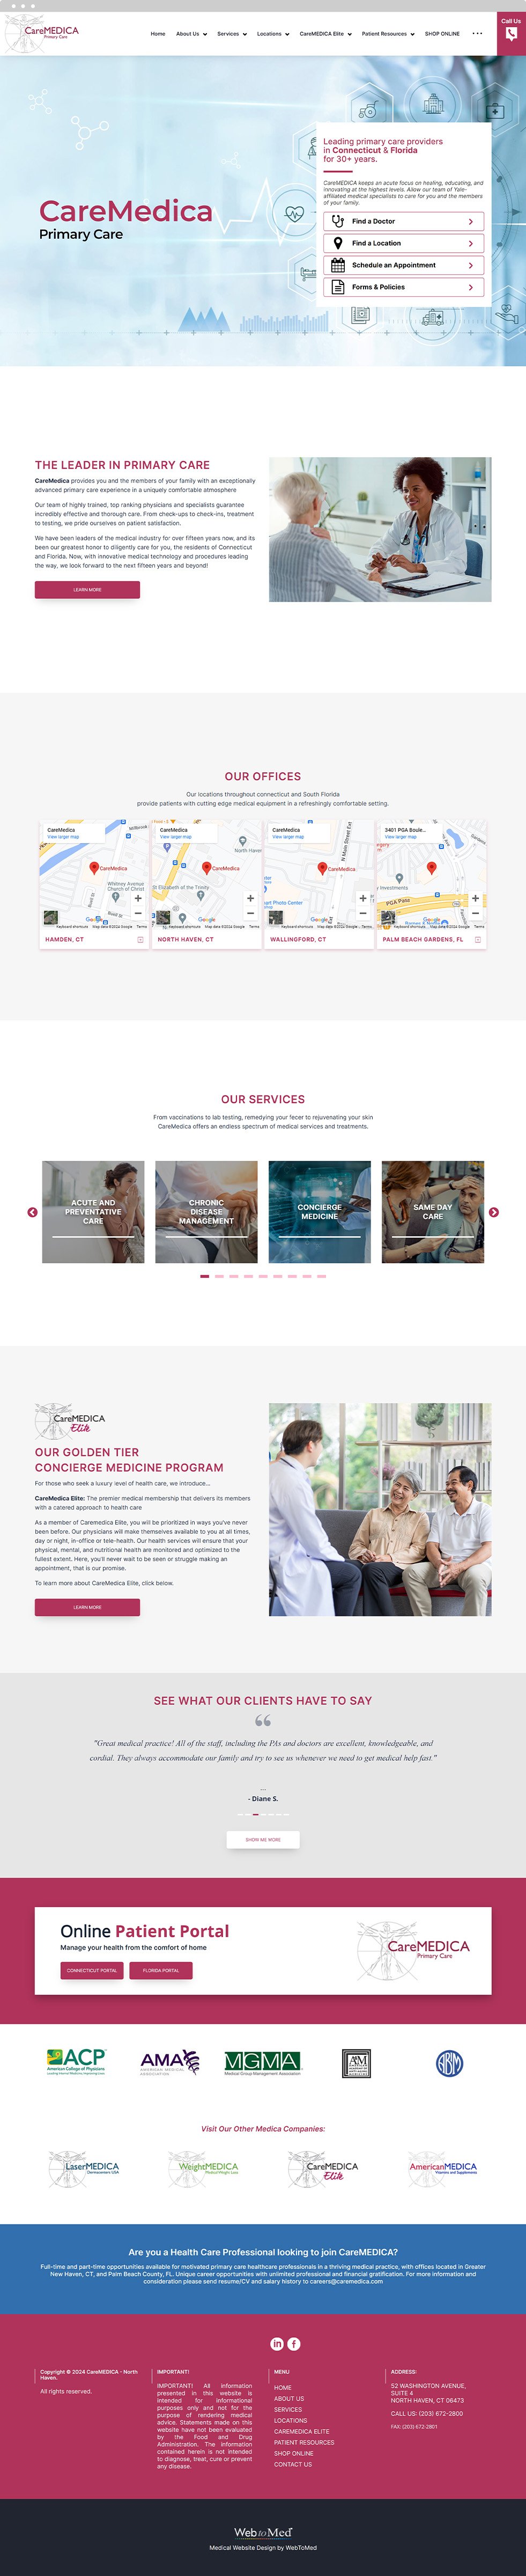 Concierge Medicine Website Design - CareMEDICA - Homepage